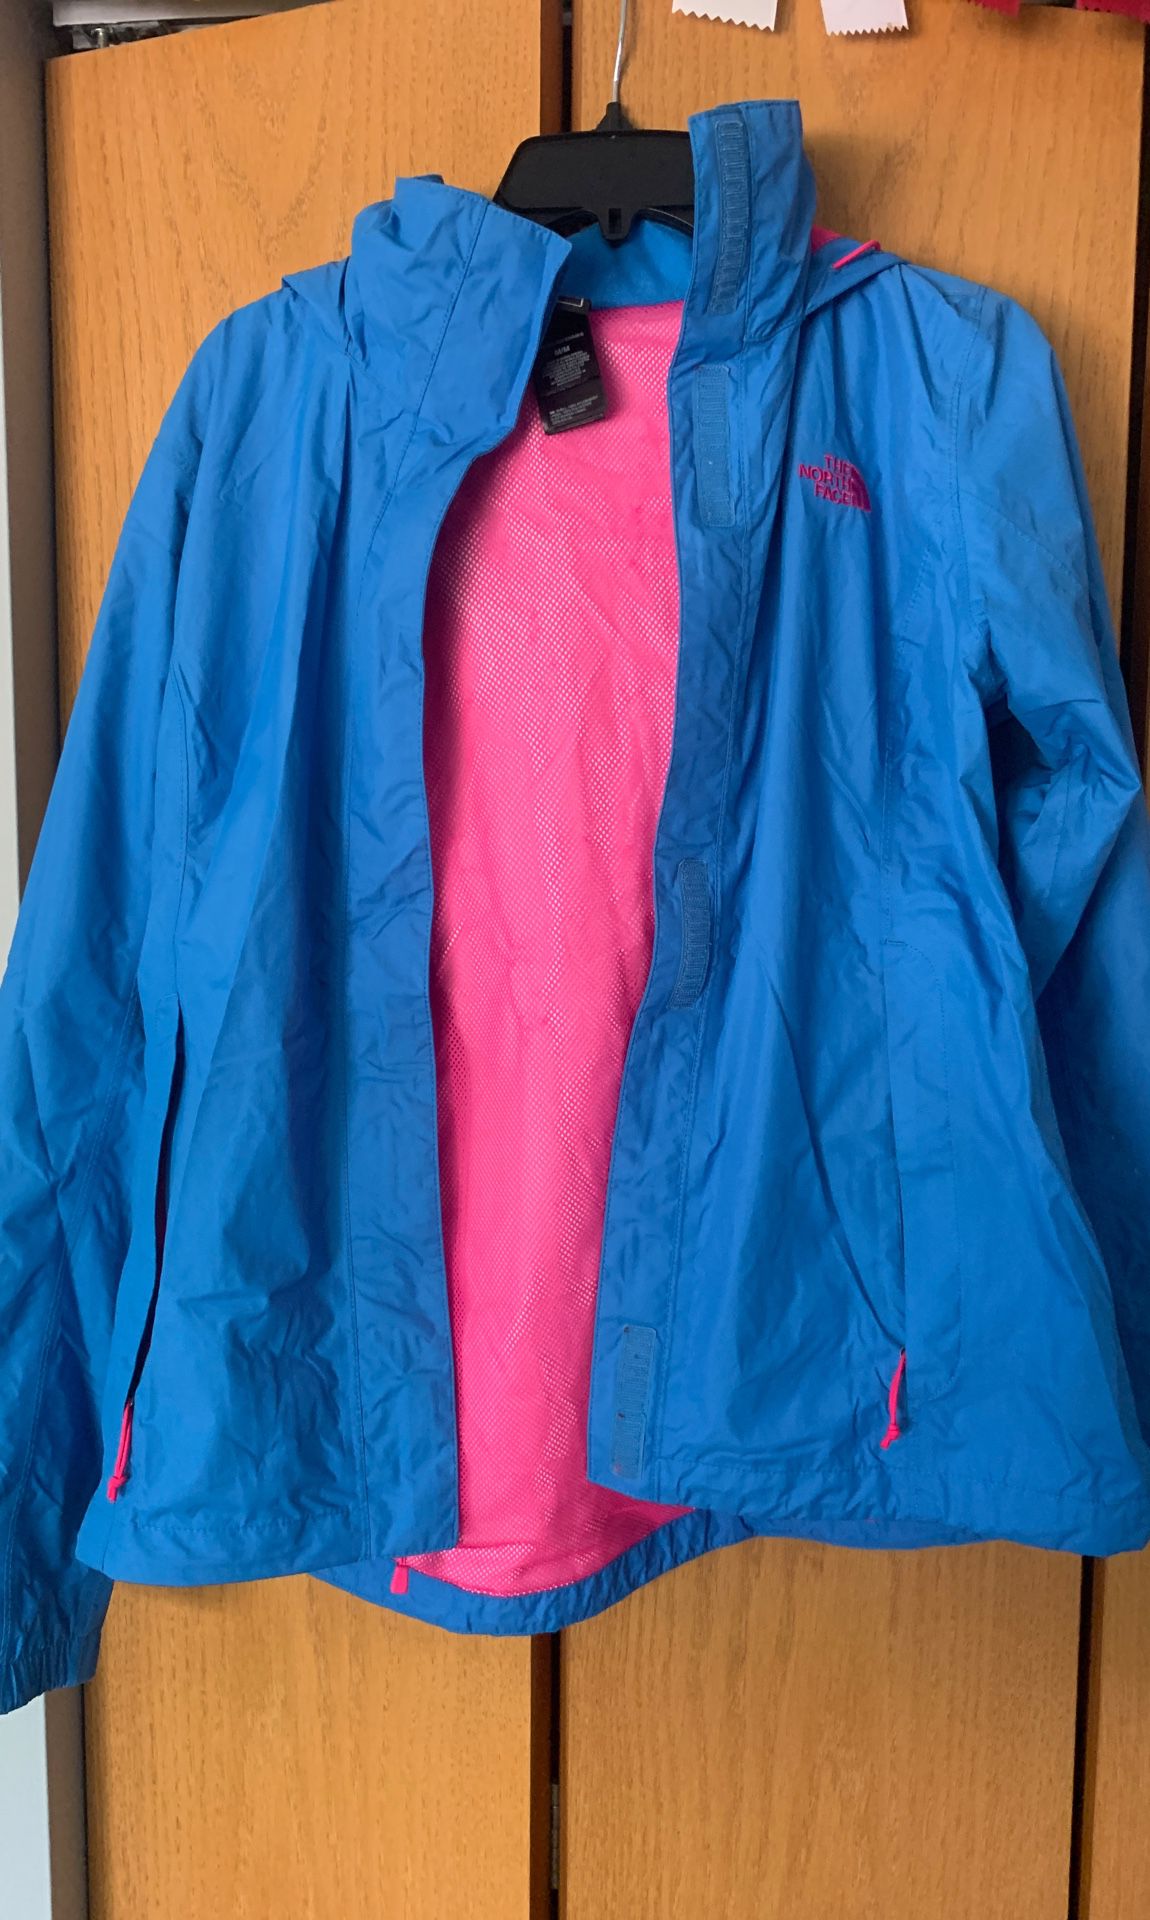 Blue North Face rain jacket